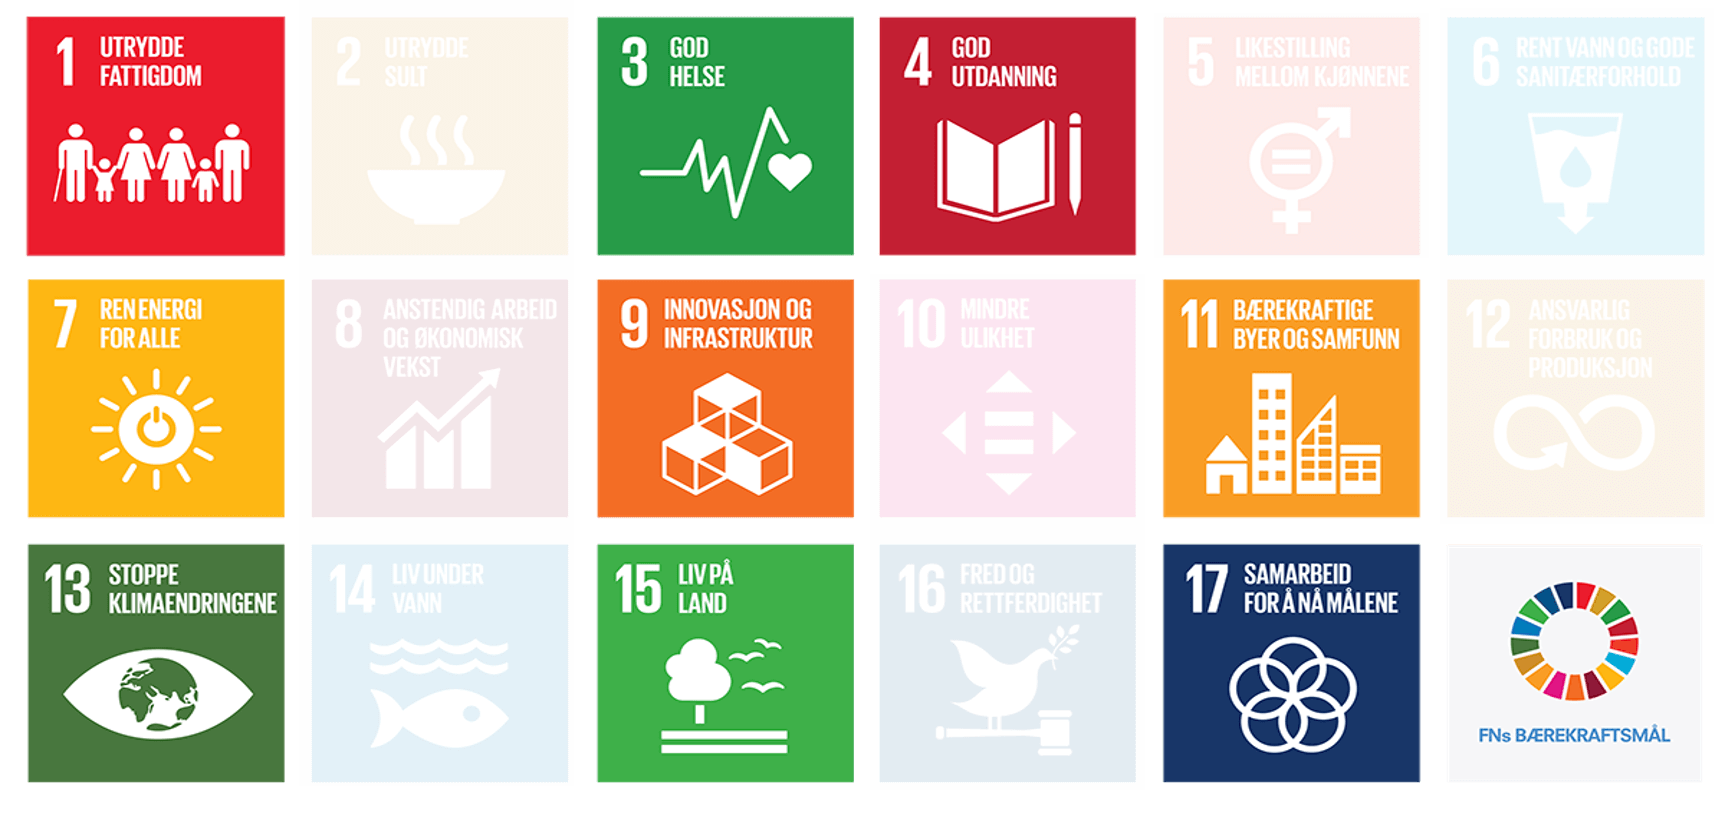 the UN's sustainability goals